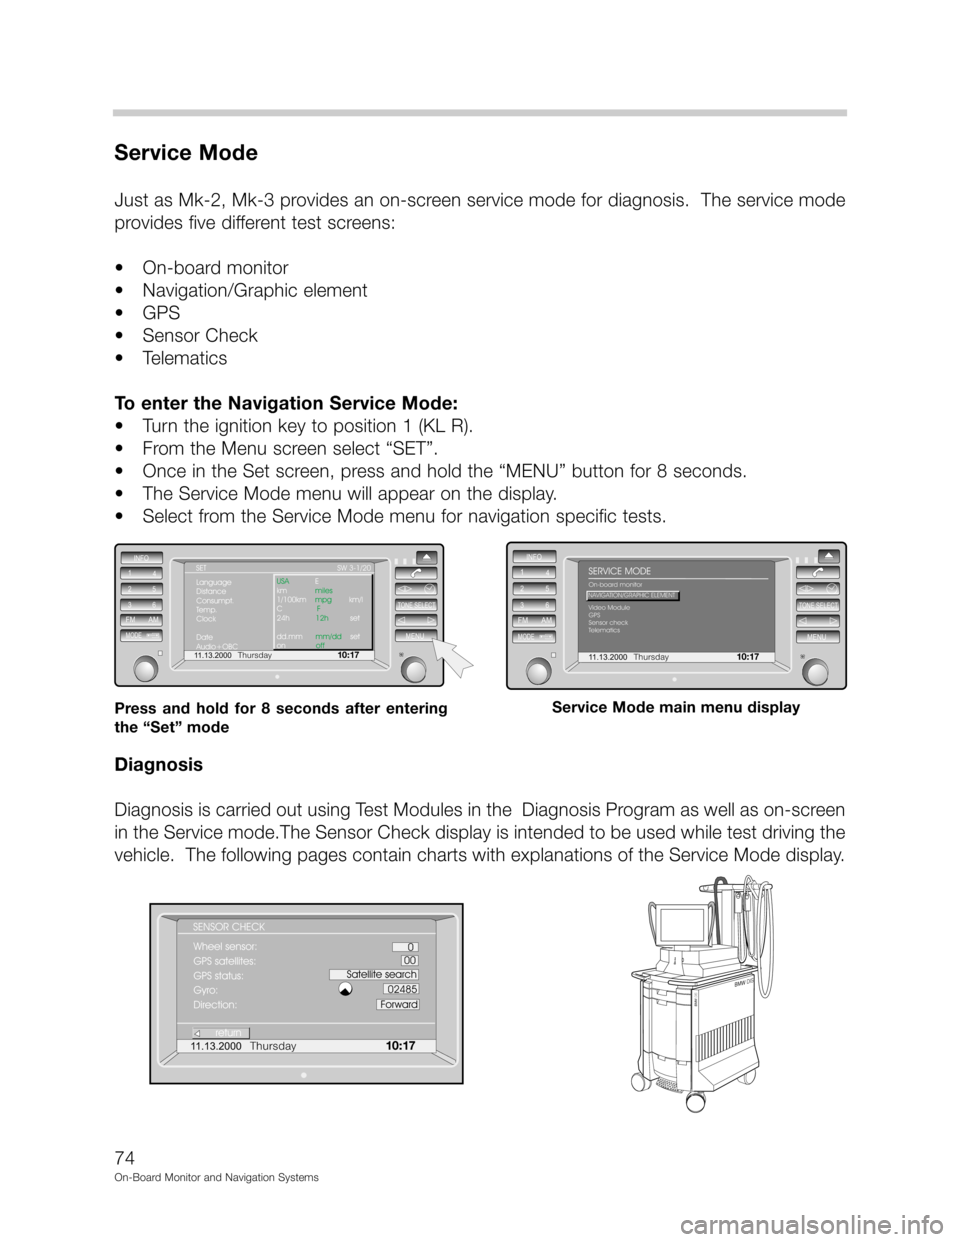 BMW 3 SERIES 2001 E46 On Board Monitor System Manual PDF ,:



"&
(	
, 	
R969.
&


&	
#&	

&&


 
	

